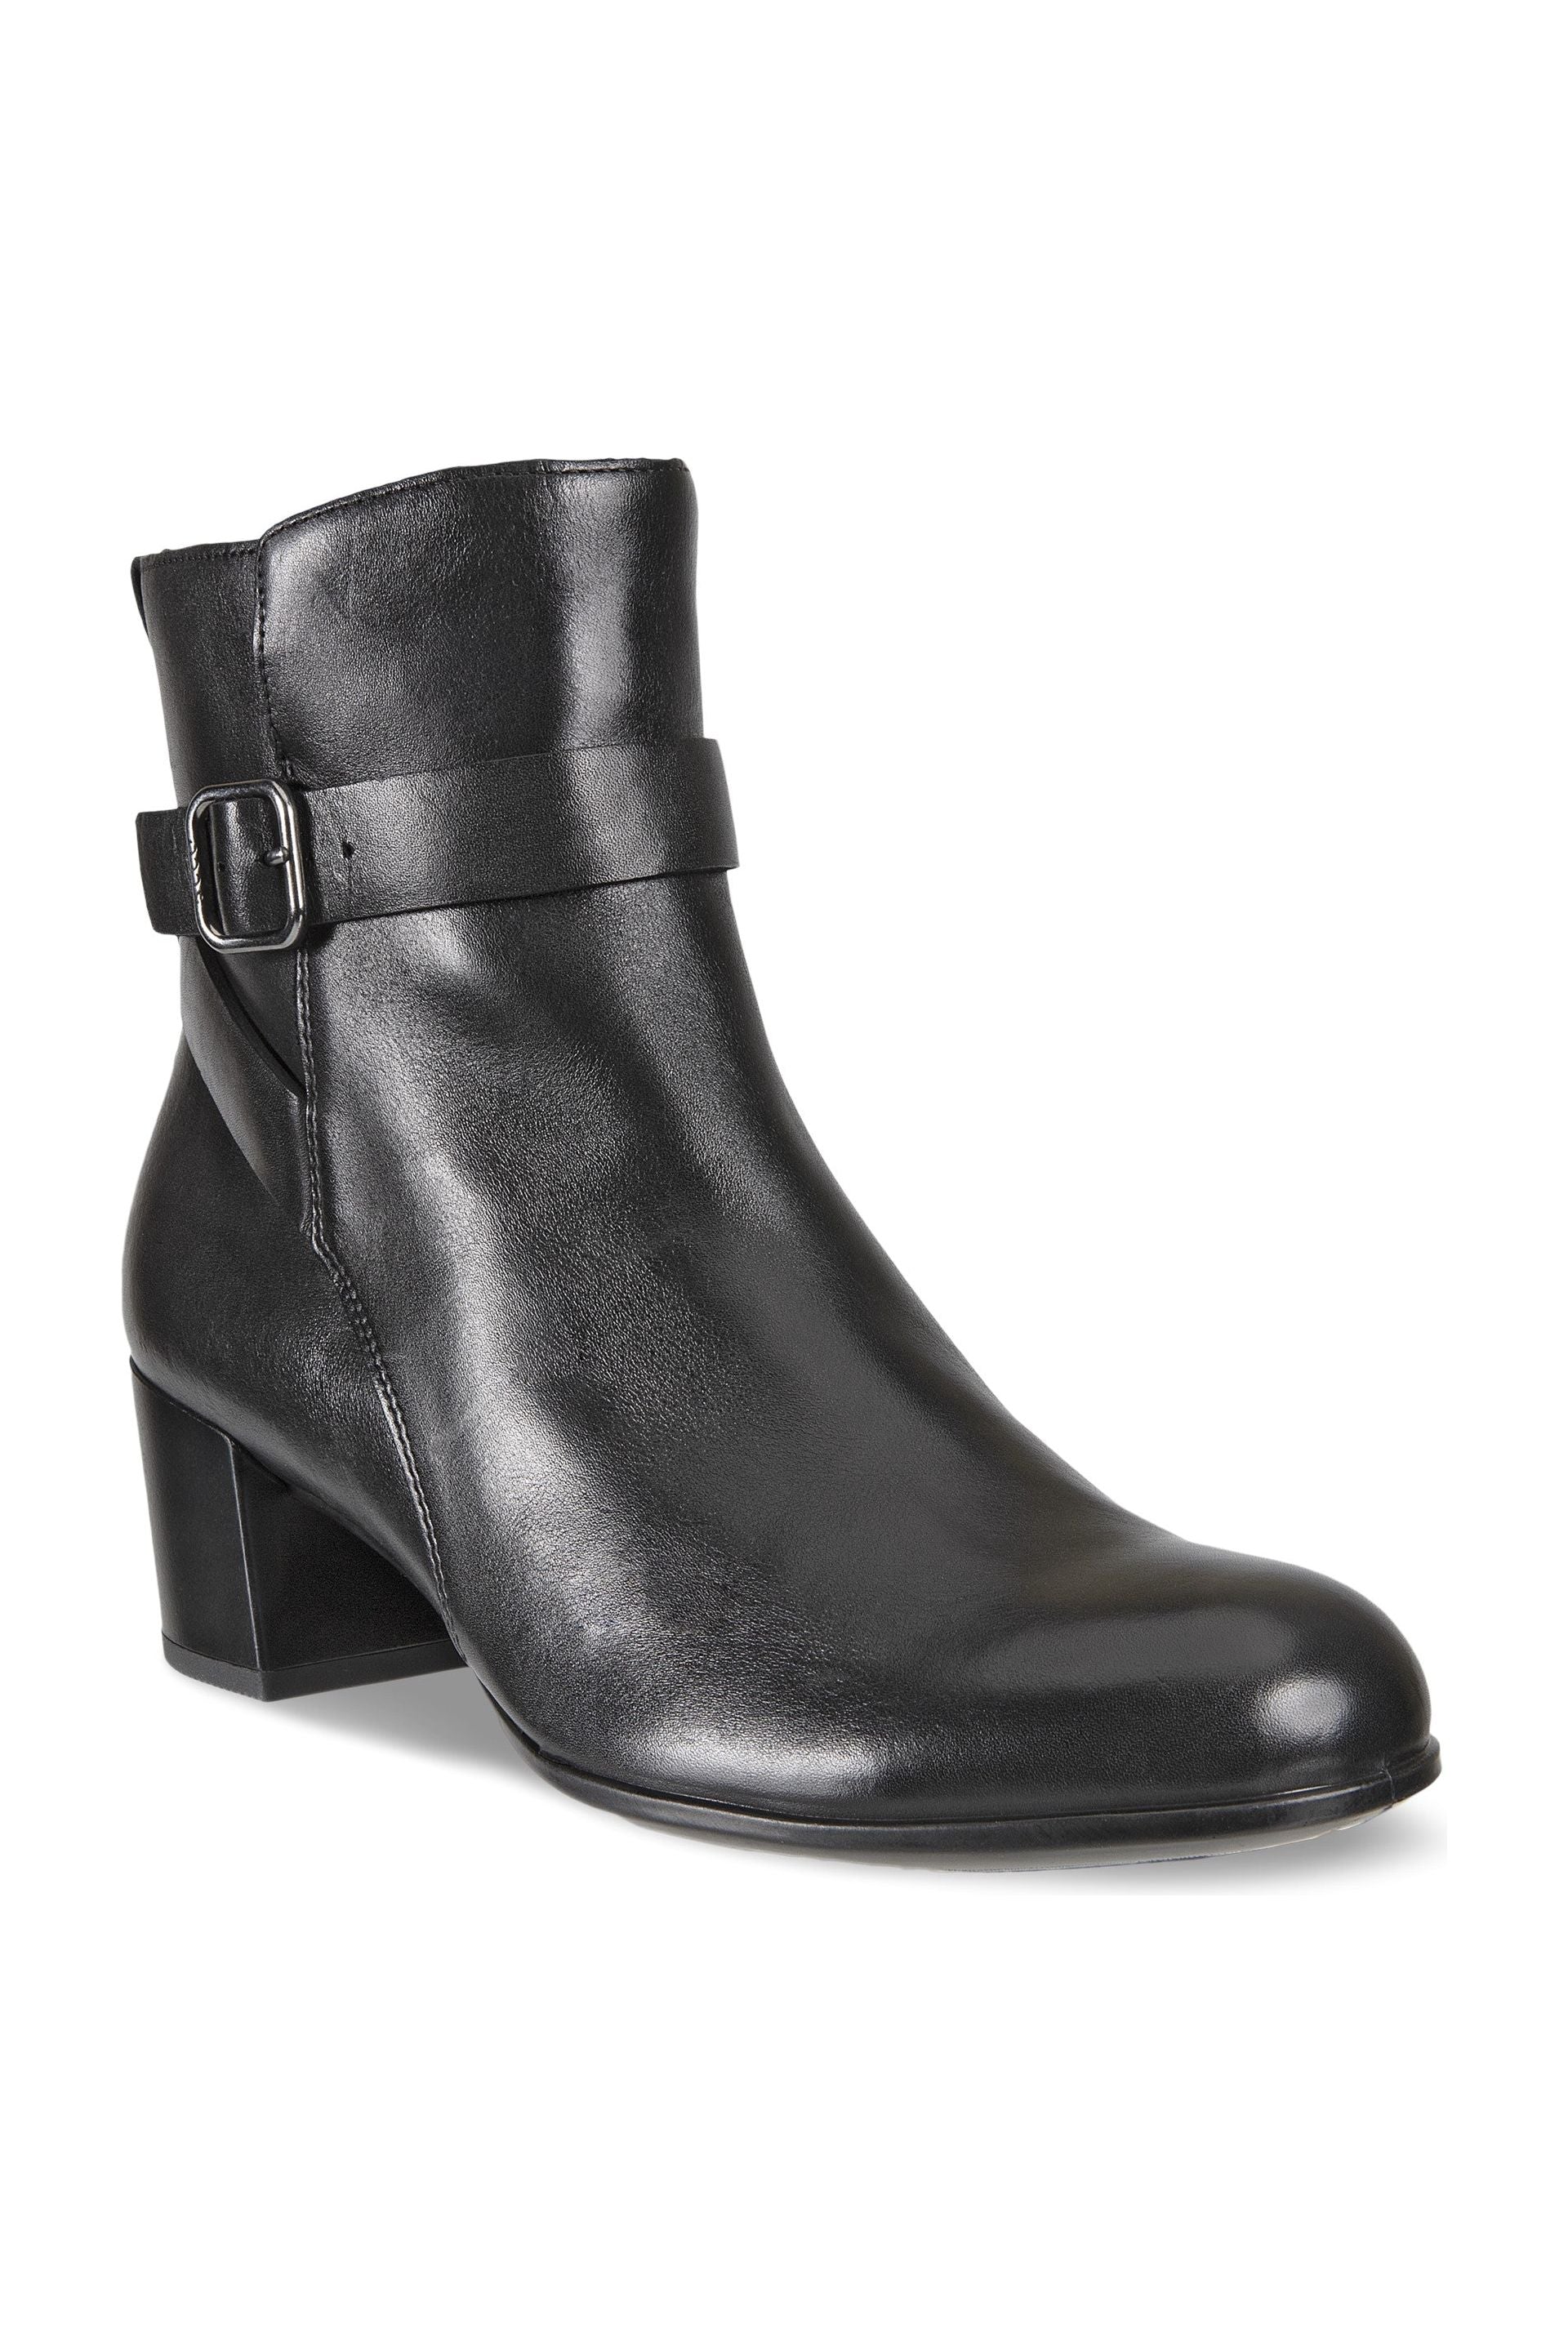 Ecco 209913-01001 Dressy Black leather boot